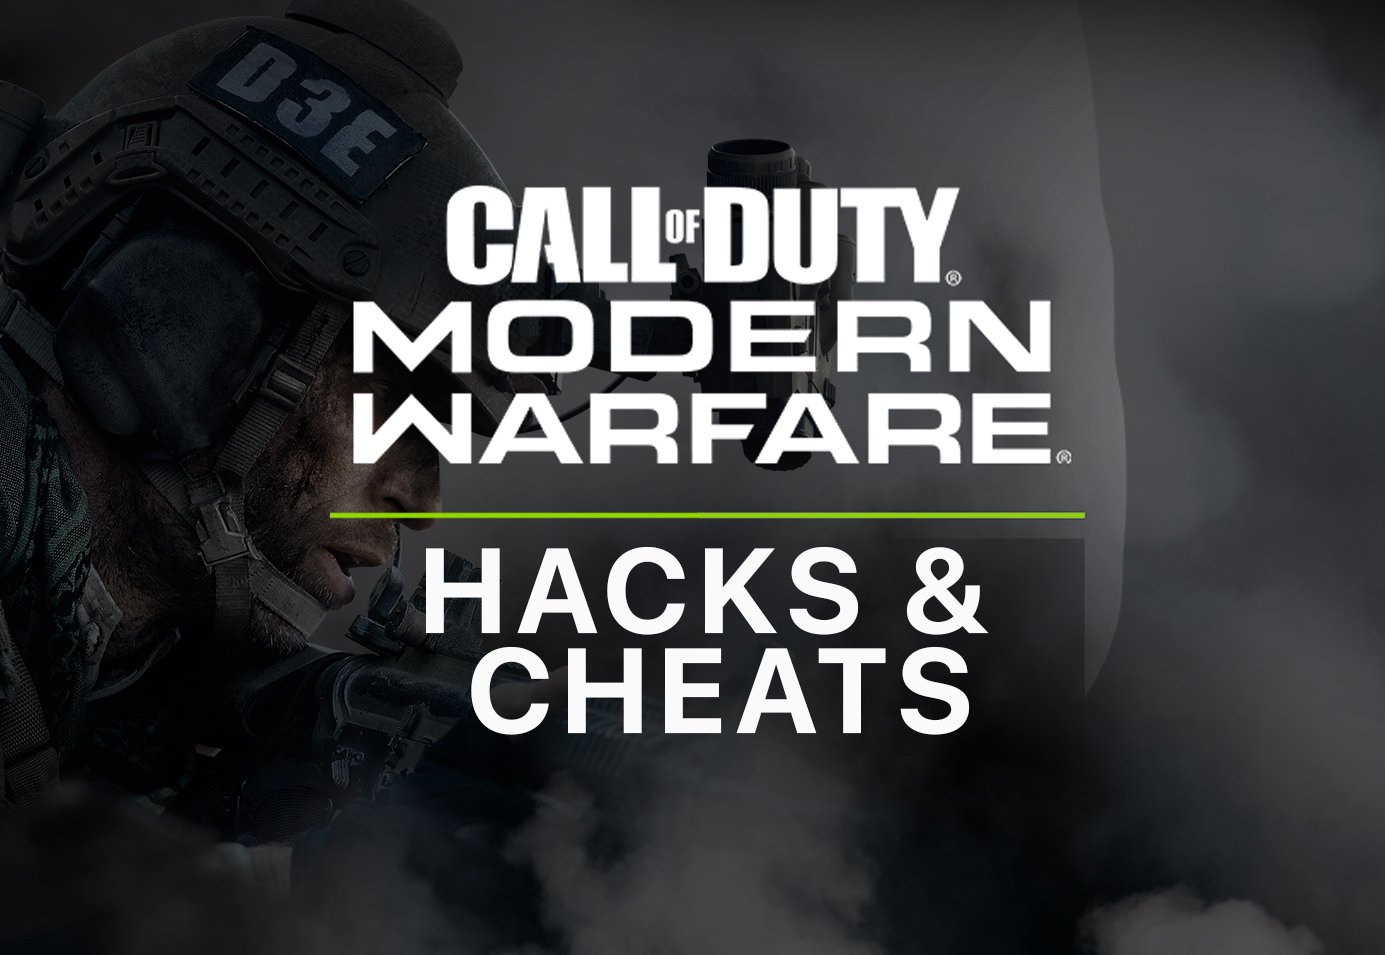 Call of Duty Modern Warfare Hacks & Cheats 5 Things to Know